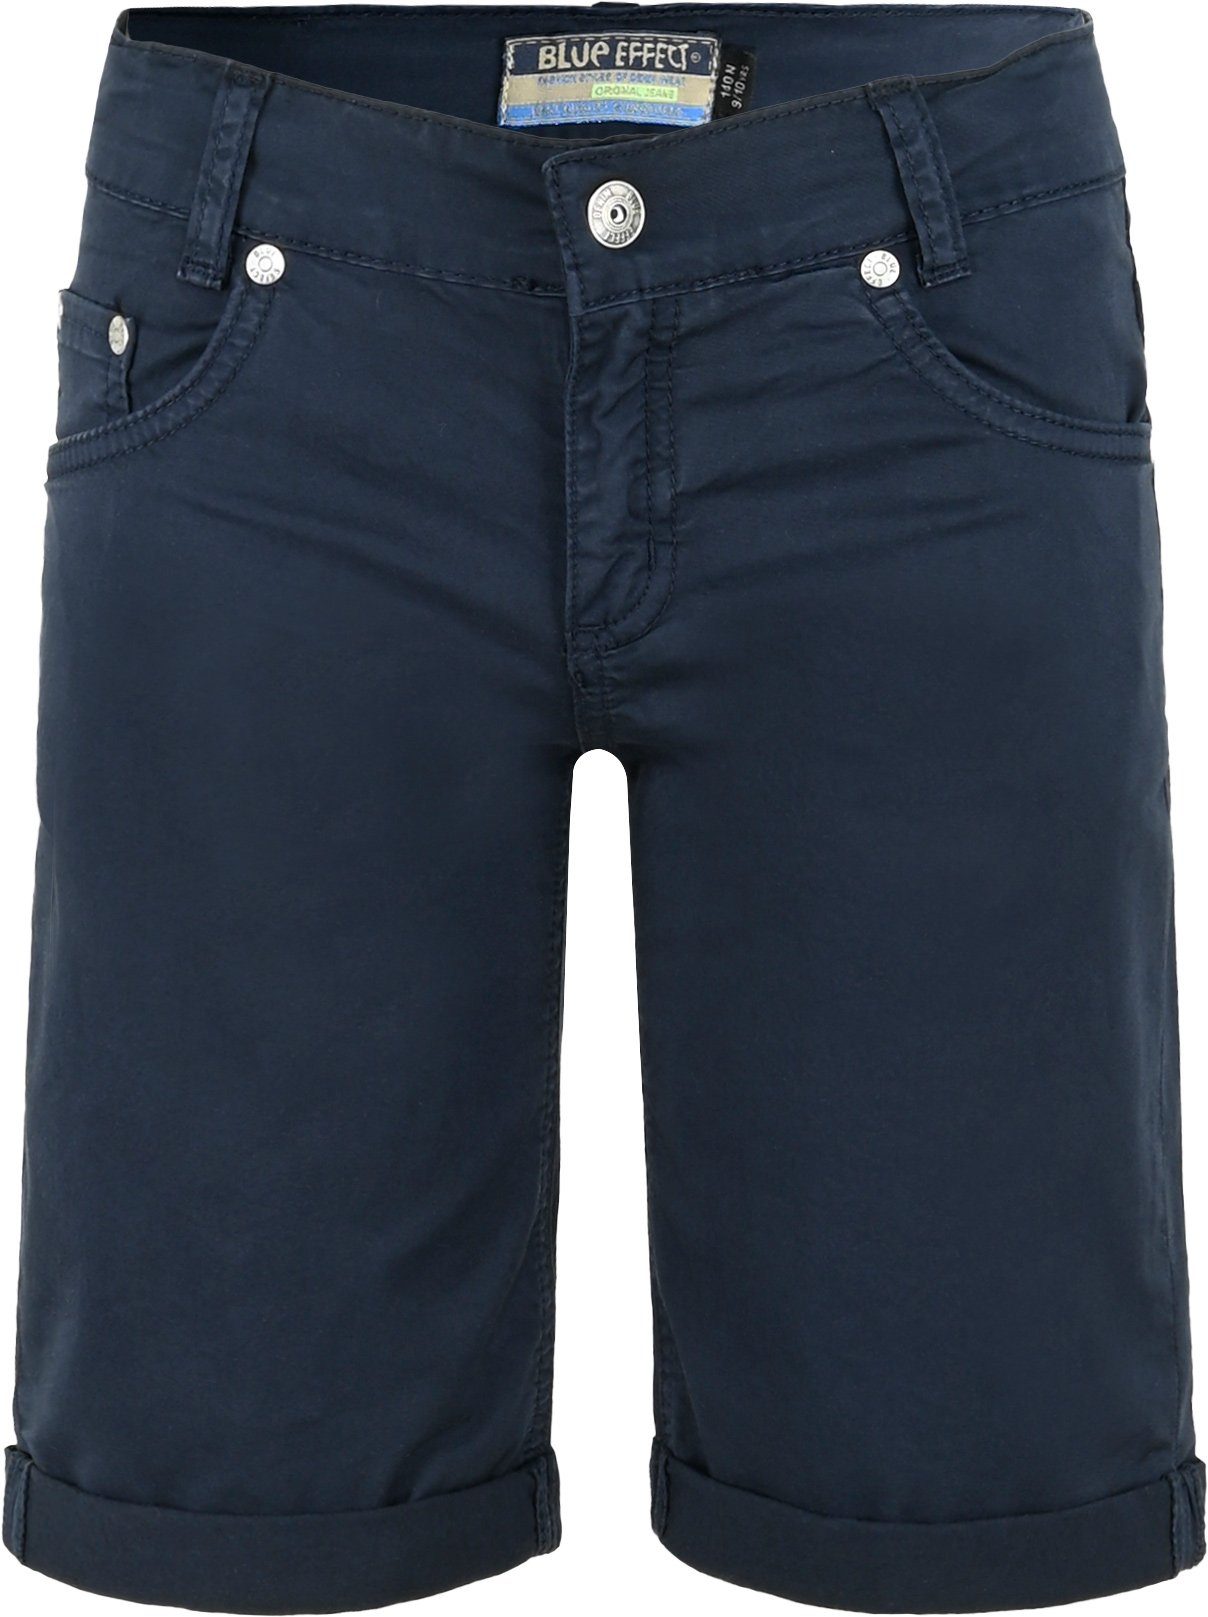 BLUE EFFECT Shorts wide fit - Plus Größe nachtblau